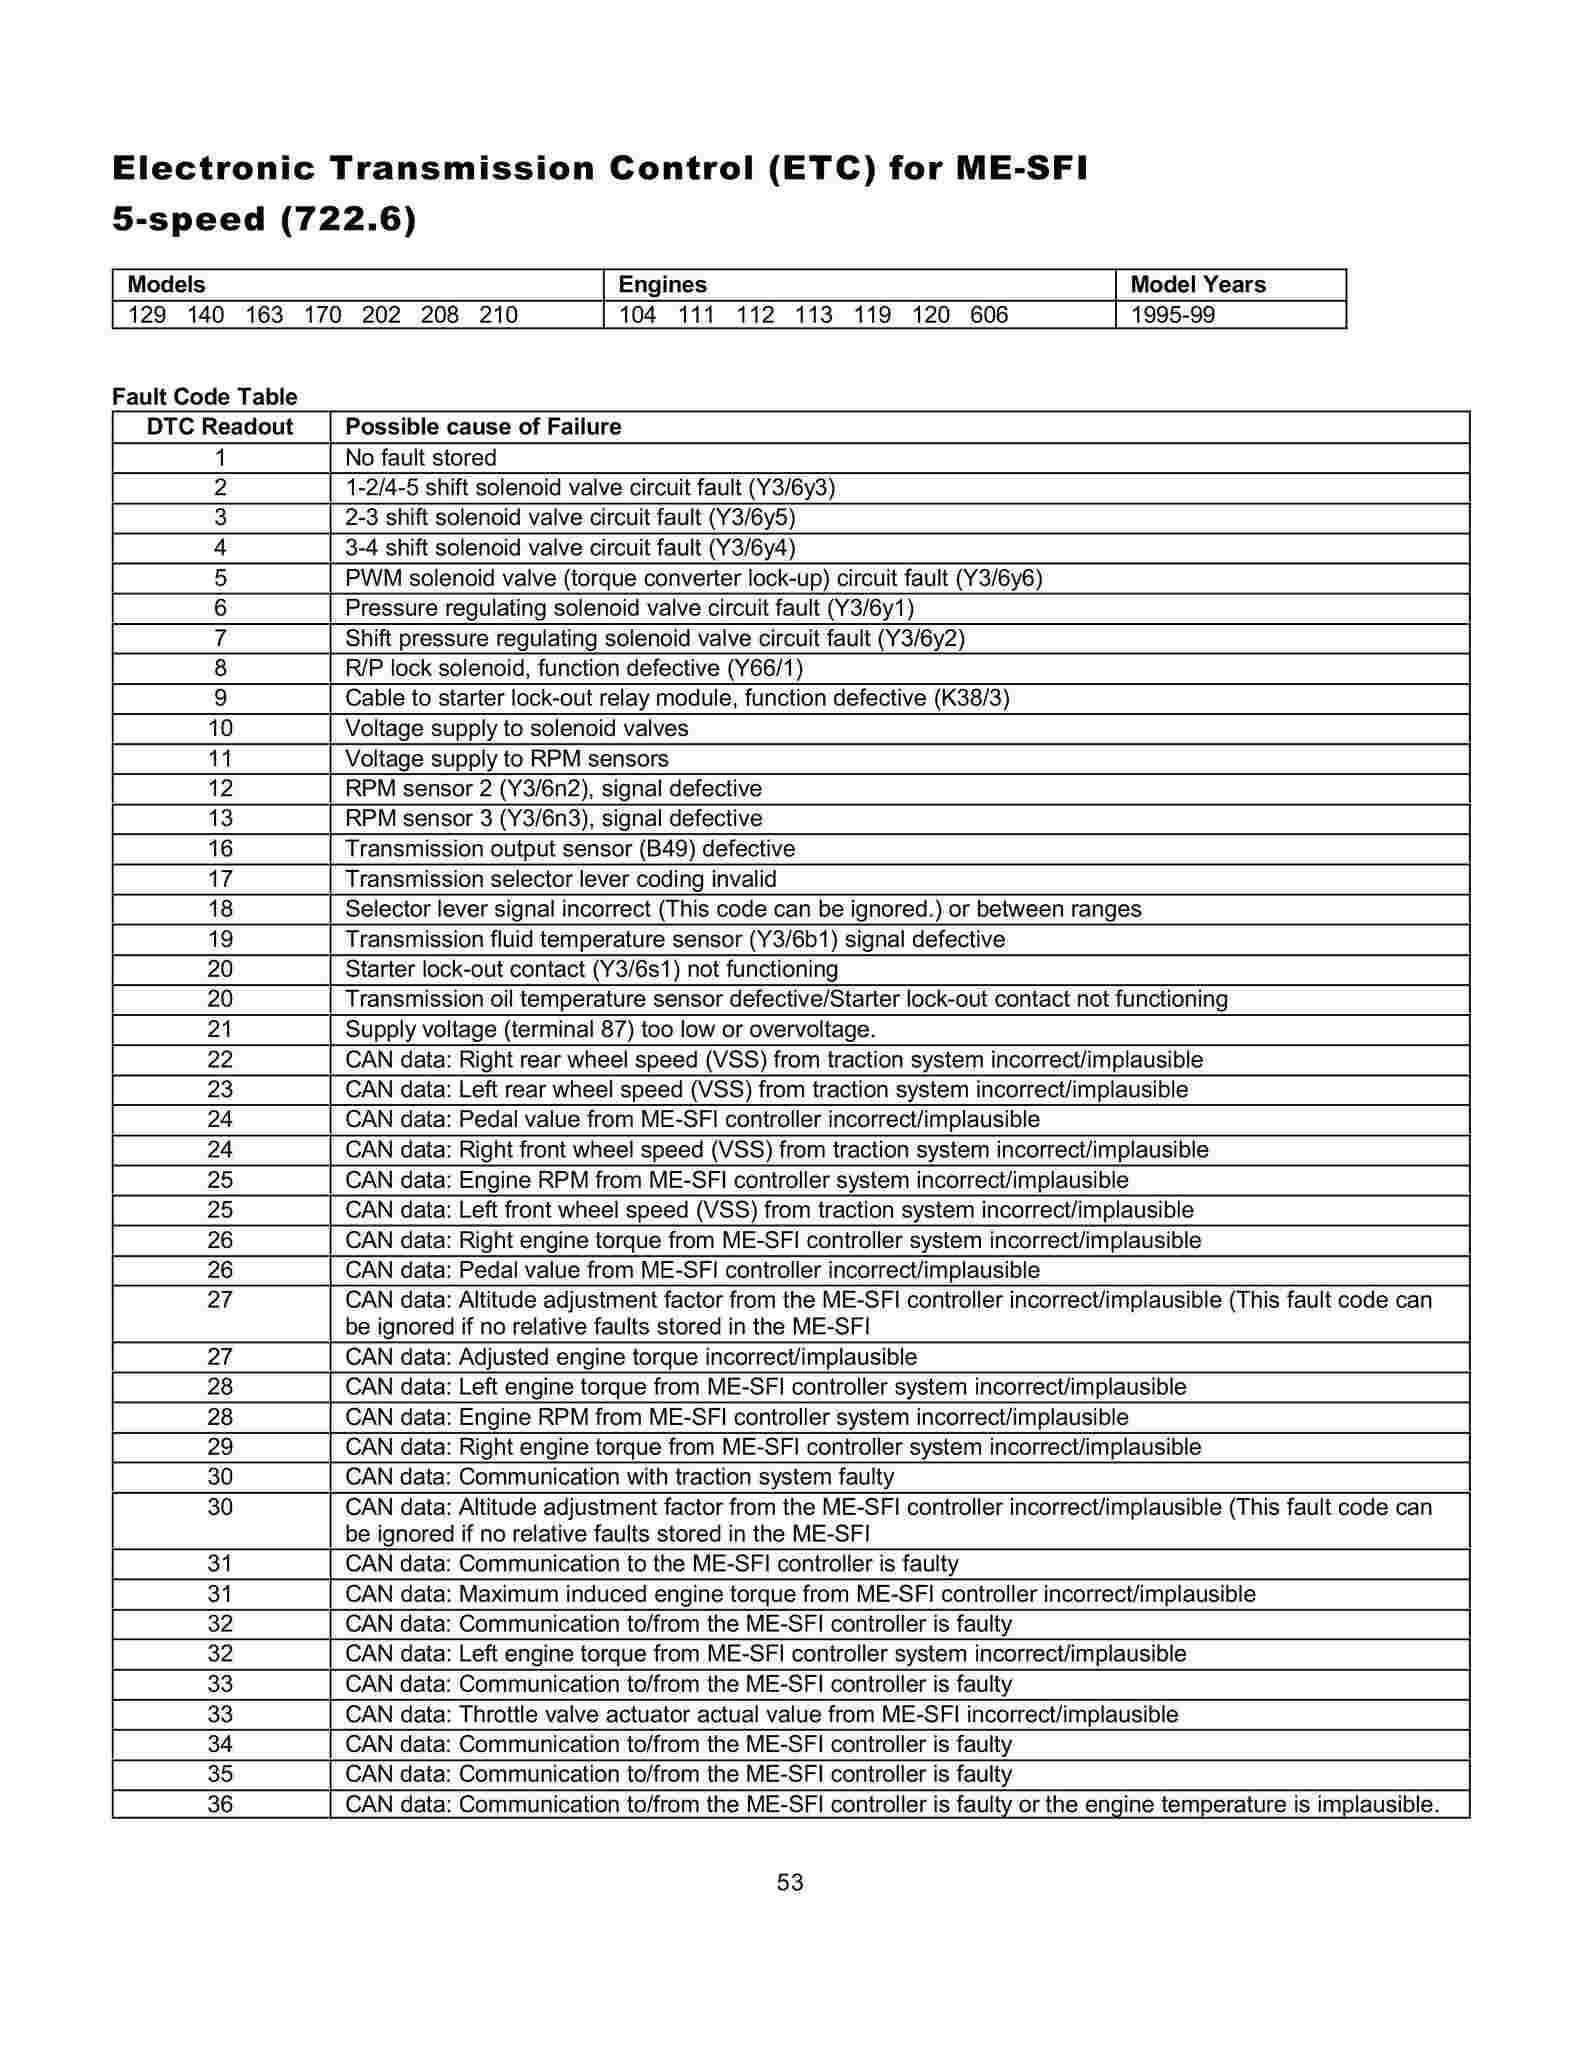 manual - Lista de Códigos de falhas (fault codes) Mercedes-Benz 005312